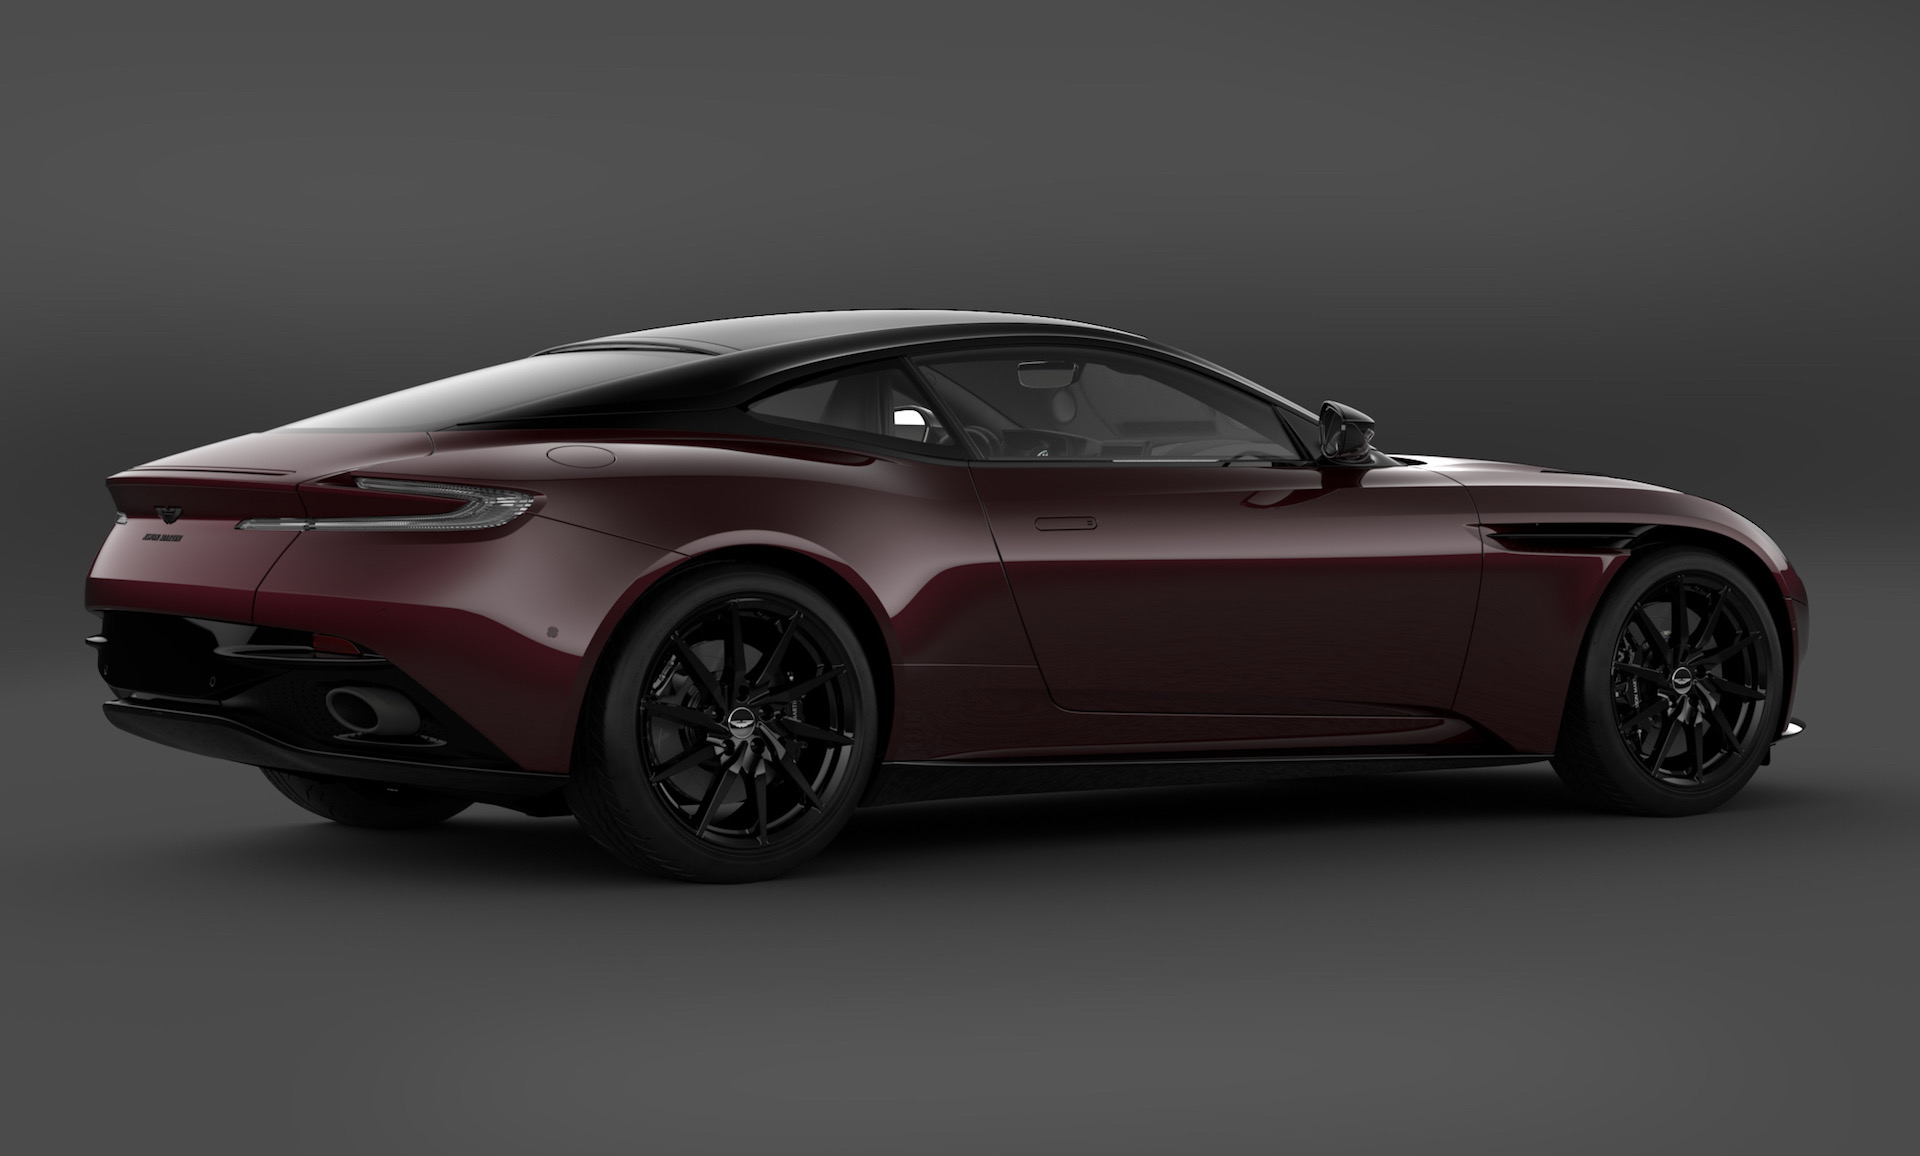 2020 Aston Martin DB11 Shadow Edition announced